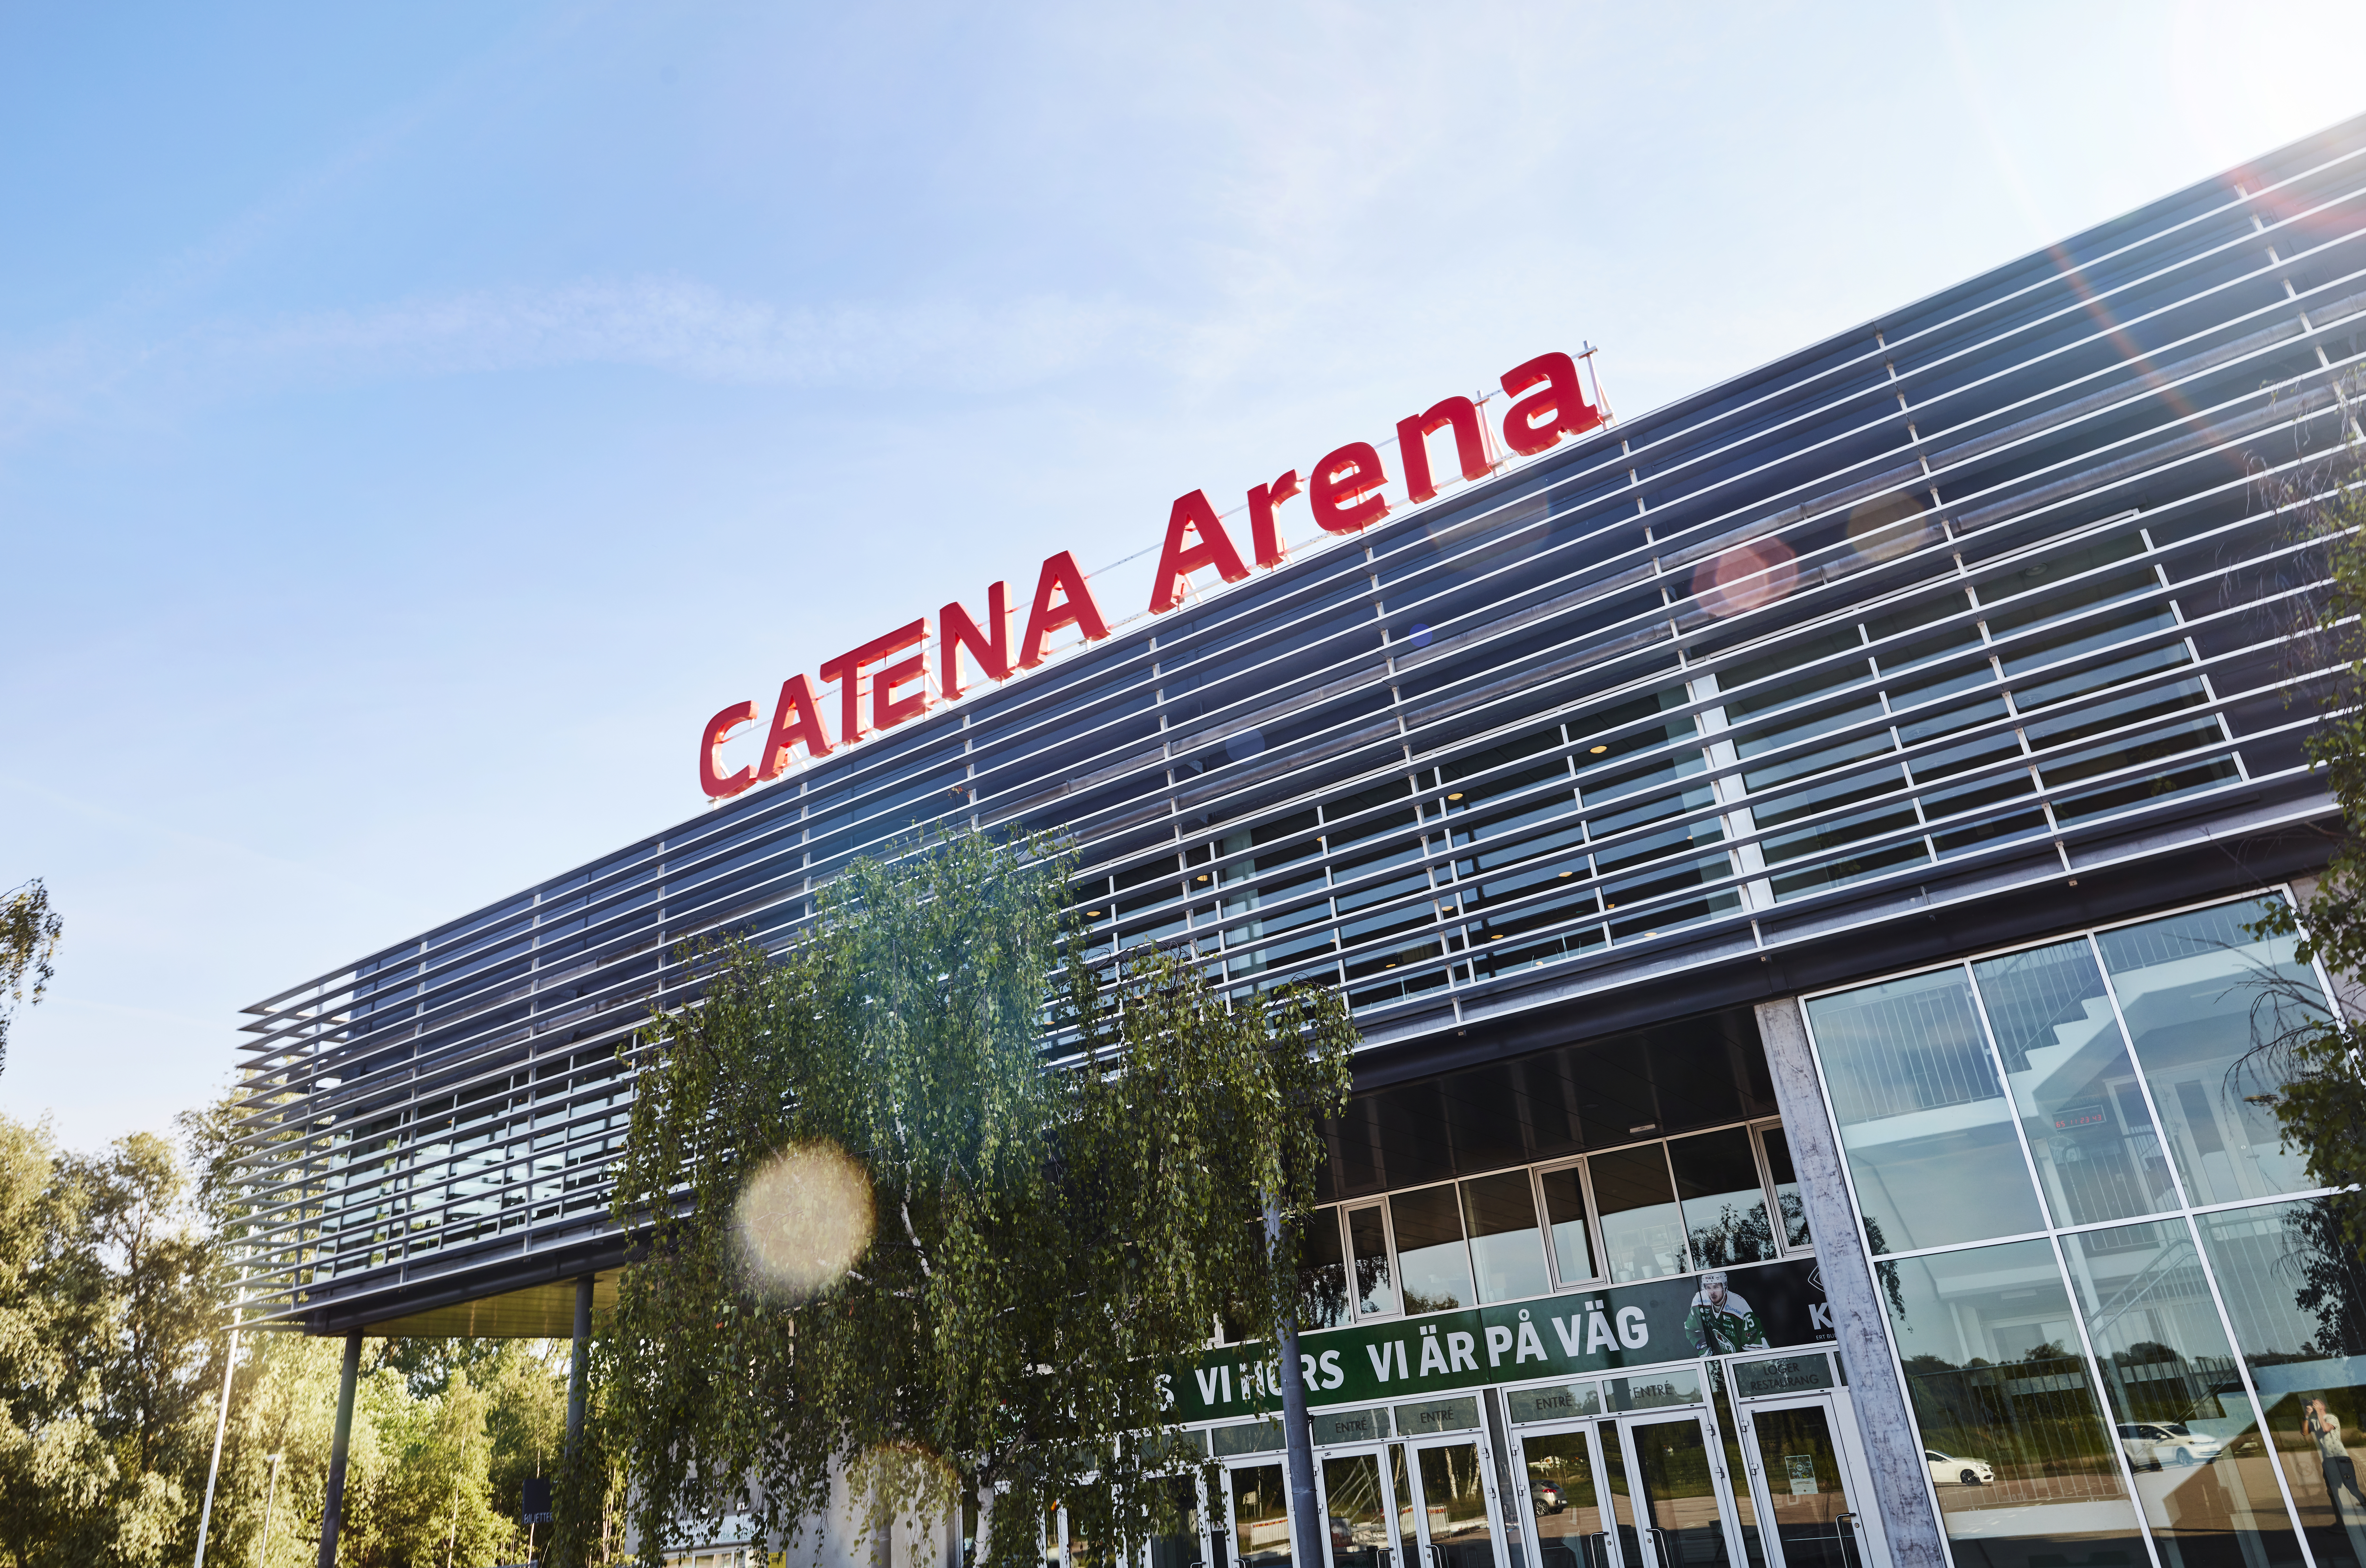 Catena Arena i Ängelholm.